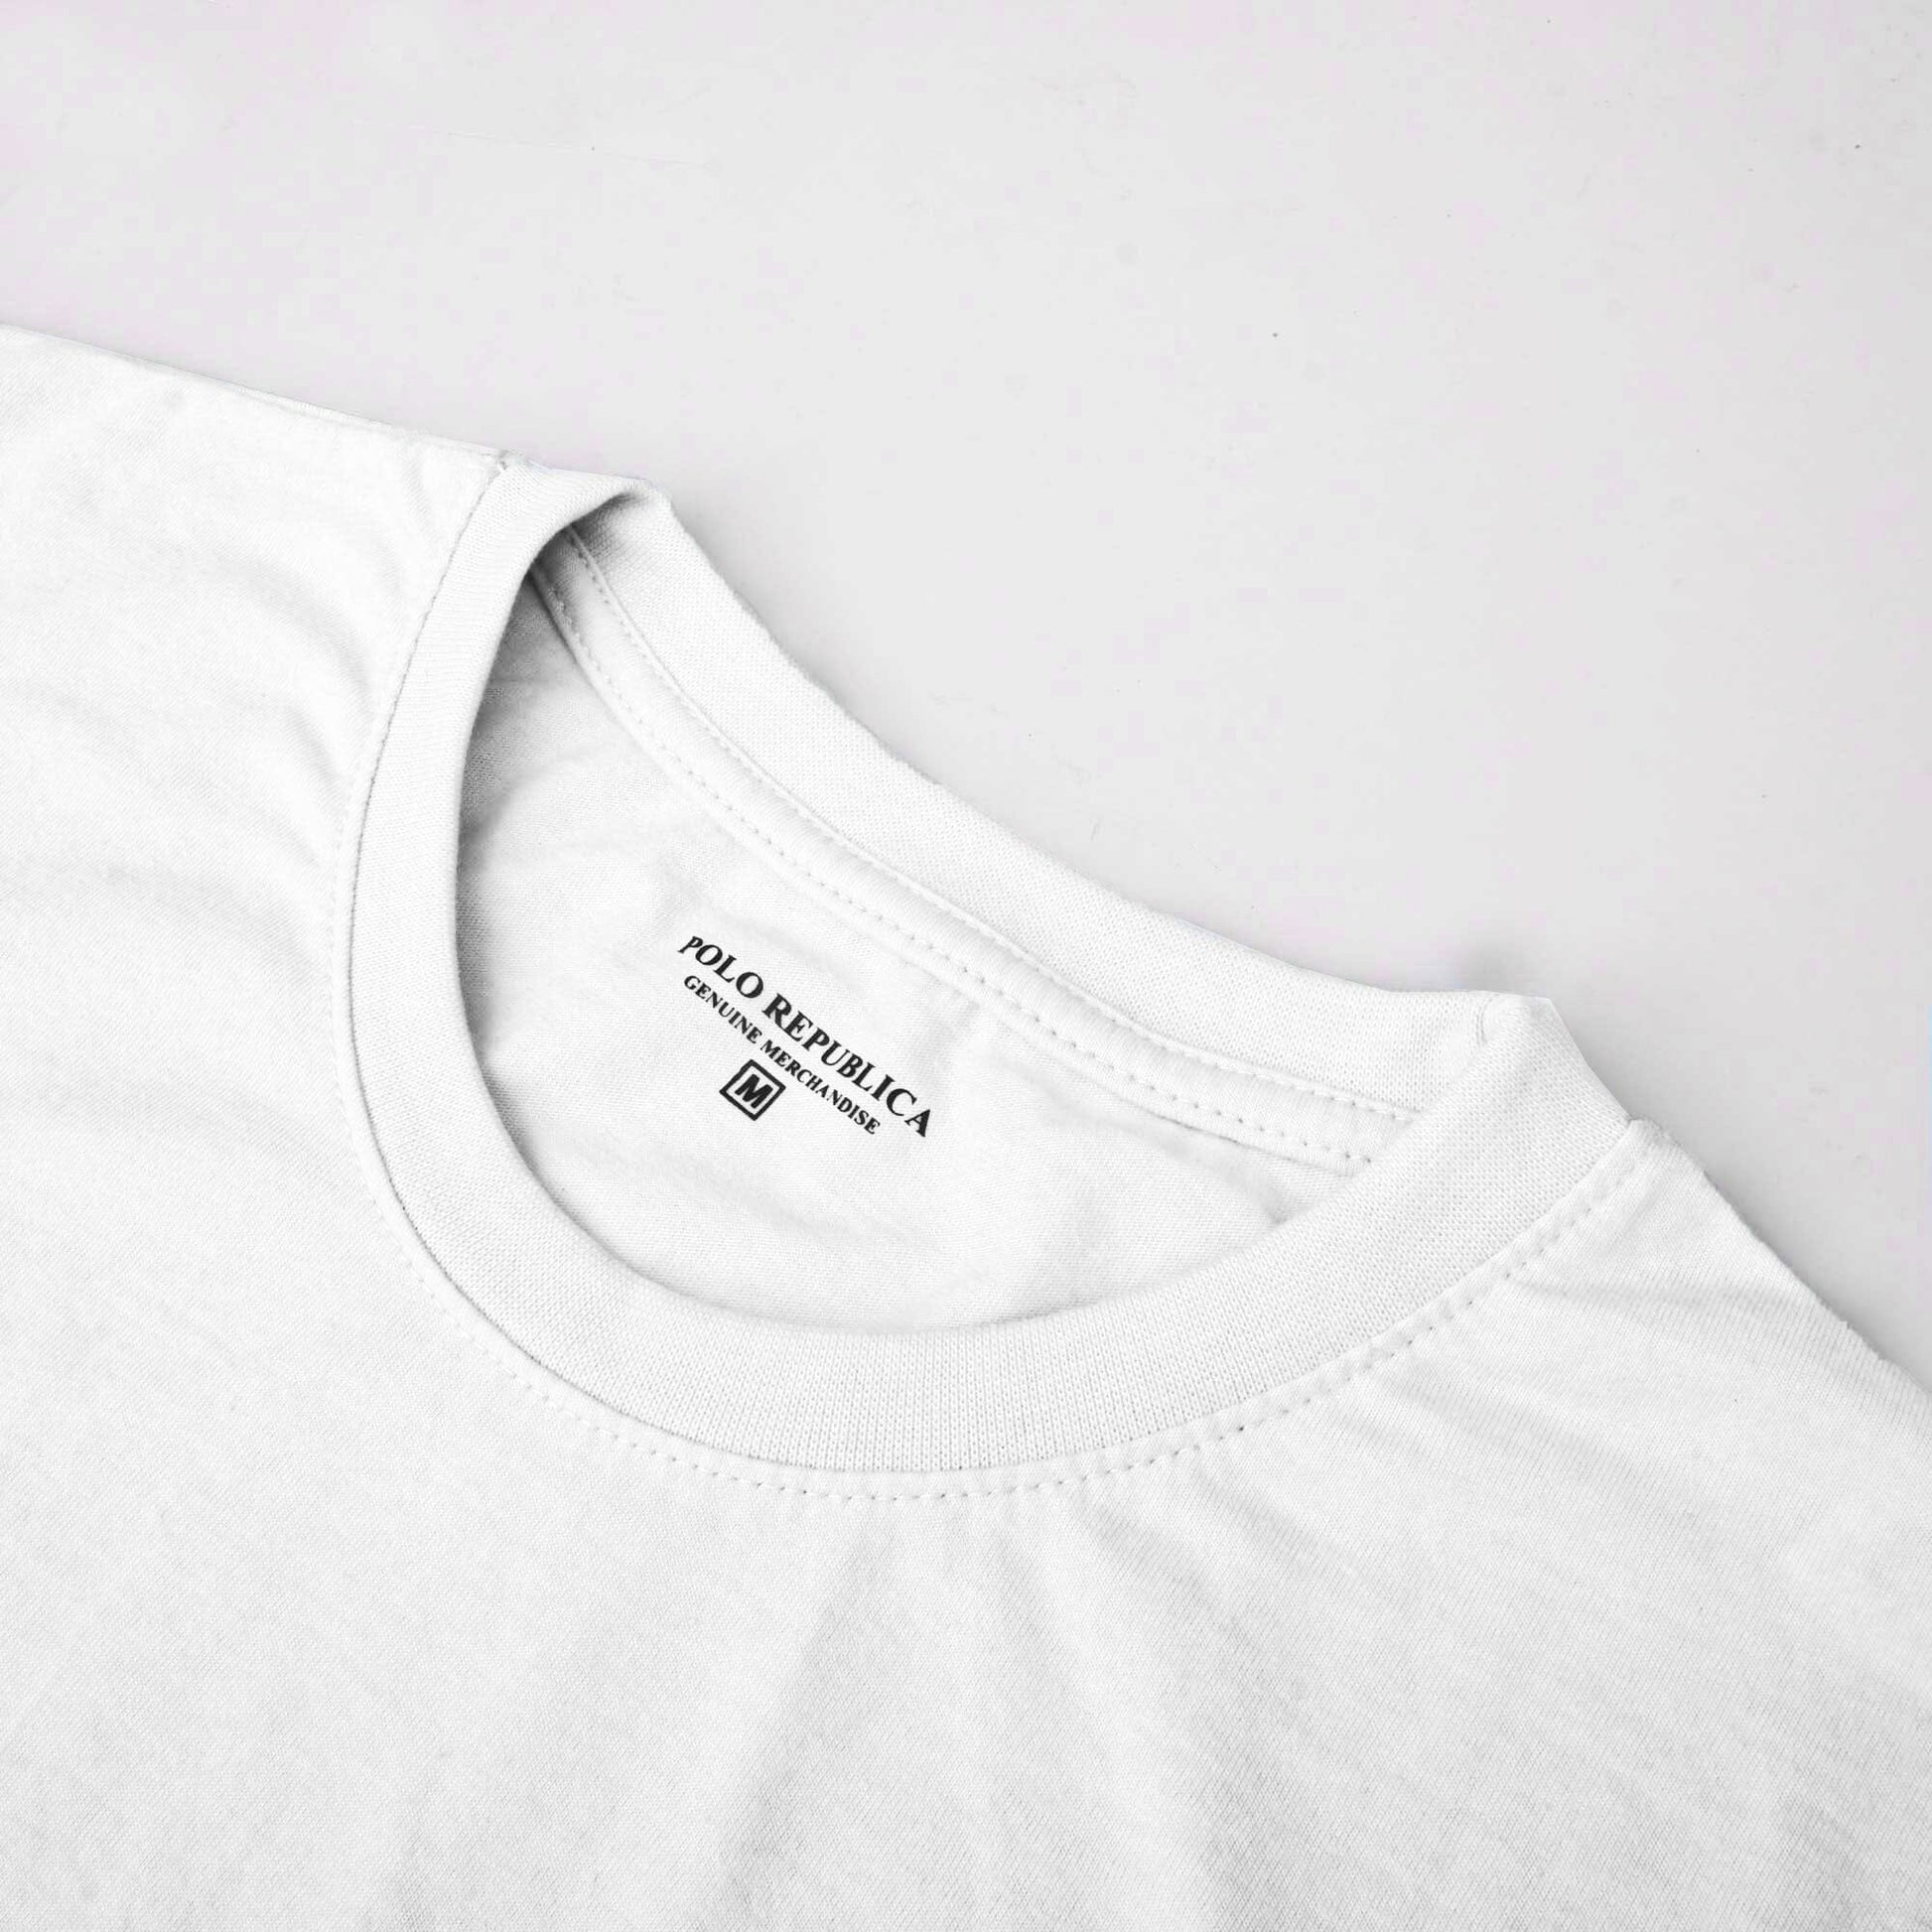 Polo Republica Men's NYC 7 Printed Short Sleeve Tee Shirt